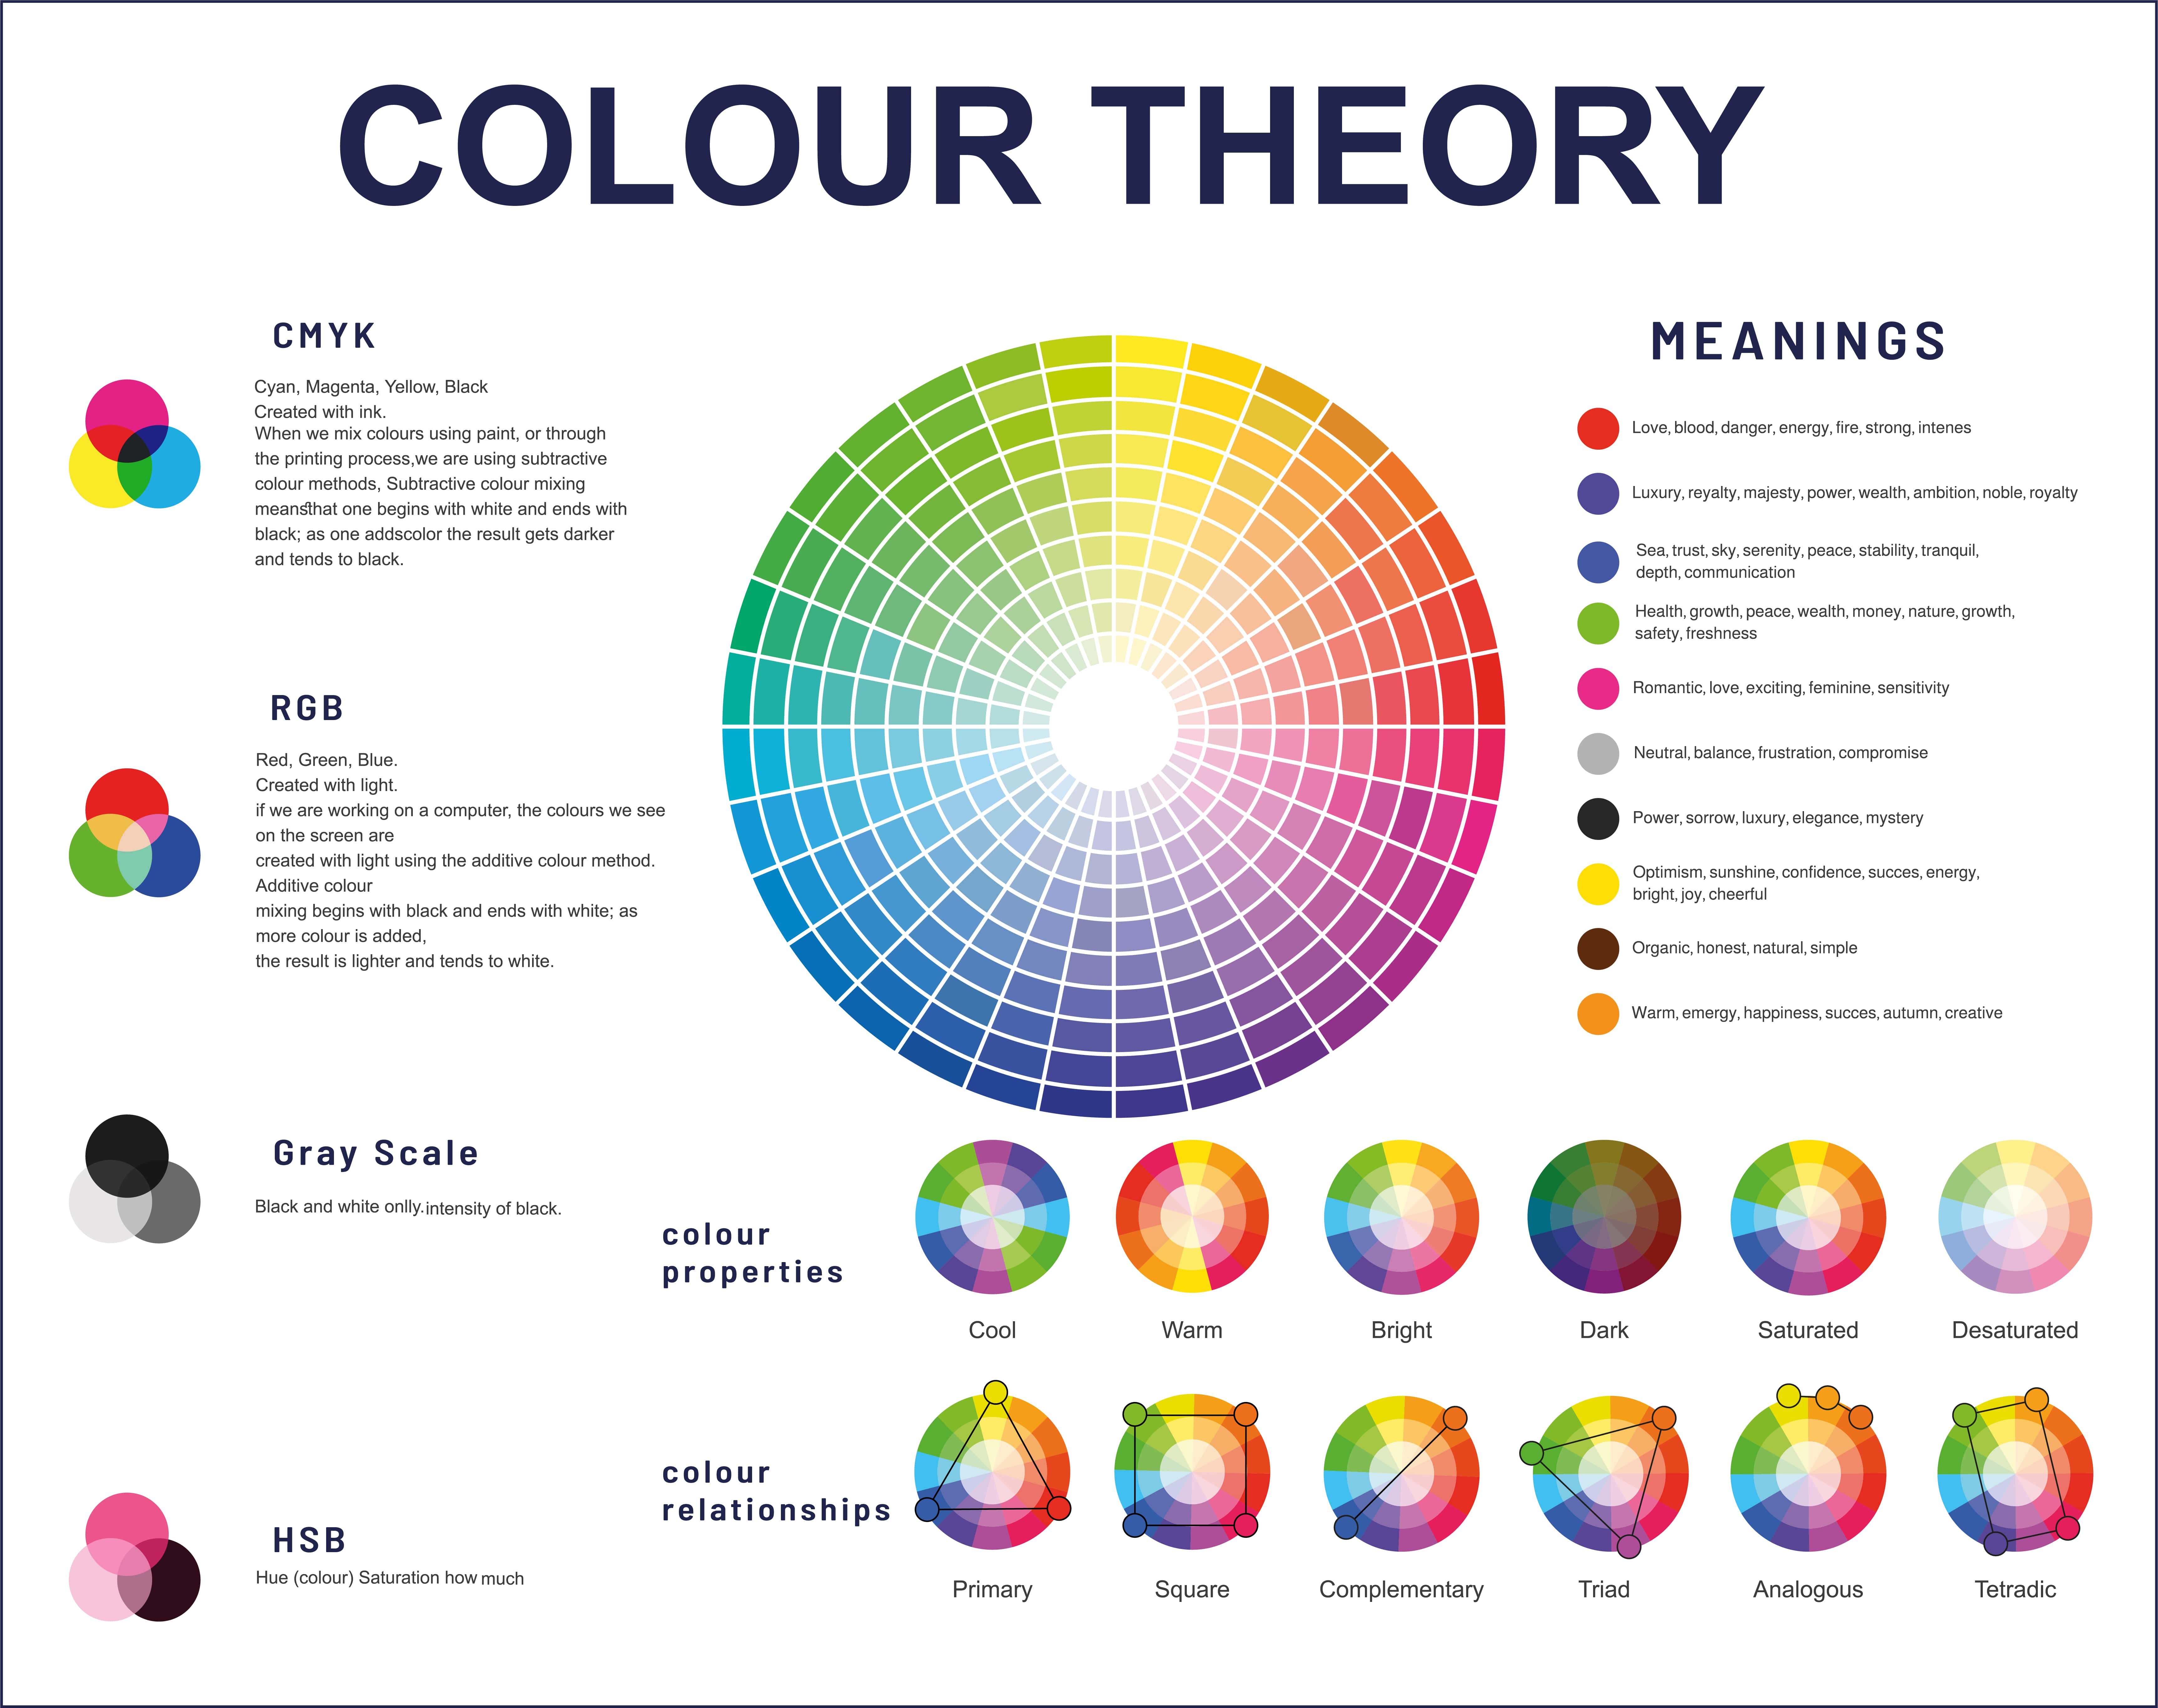 colour theory